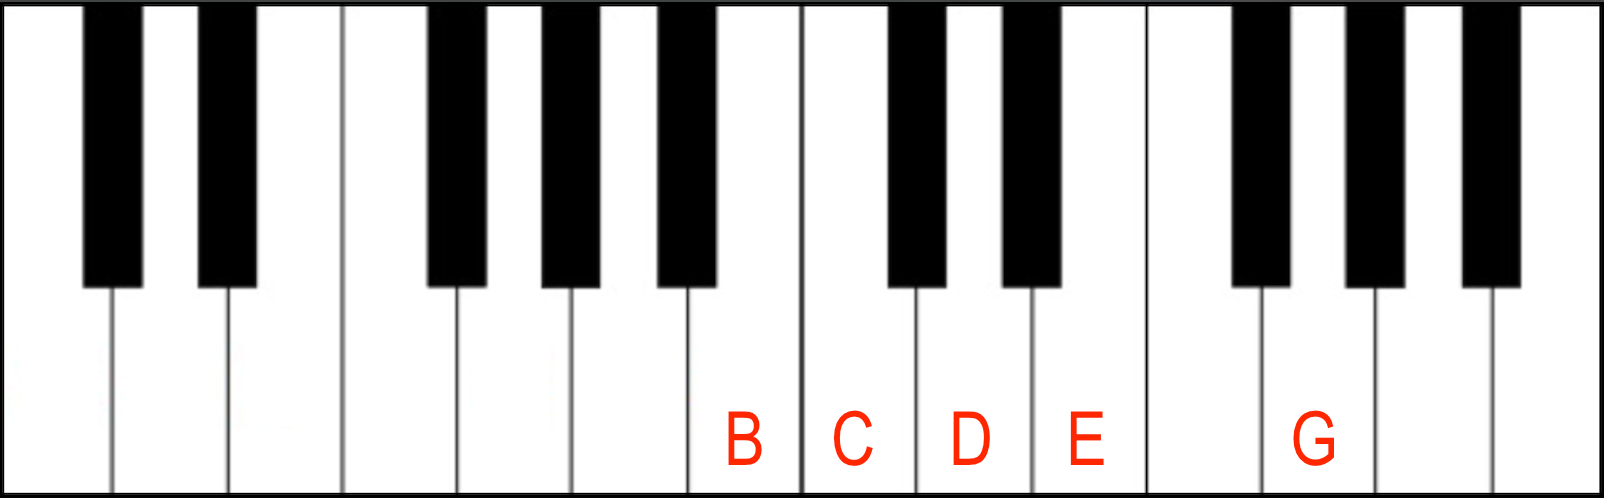 Jazz Piano Chords: Major 9th Jazz Piano Chord in 3rd inversion